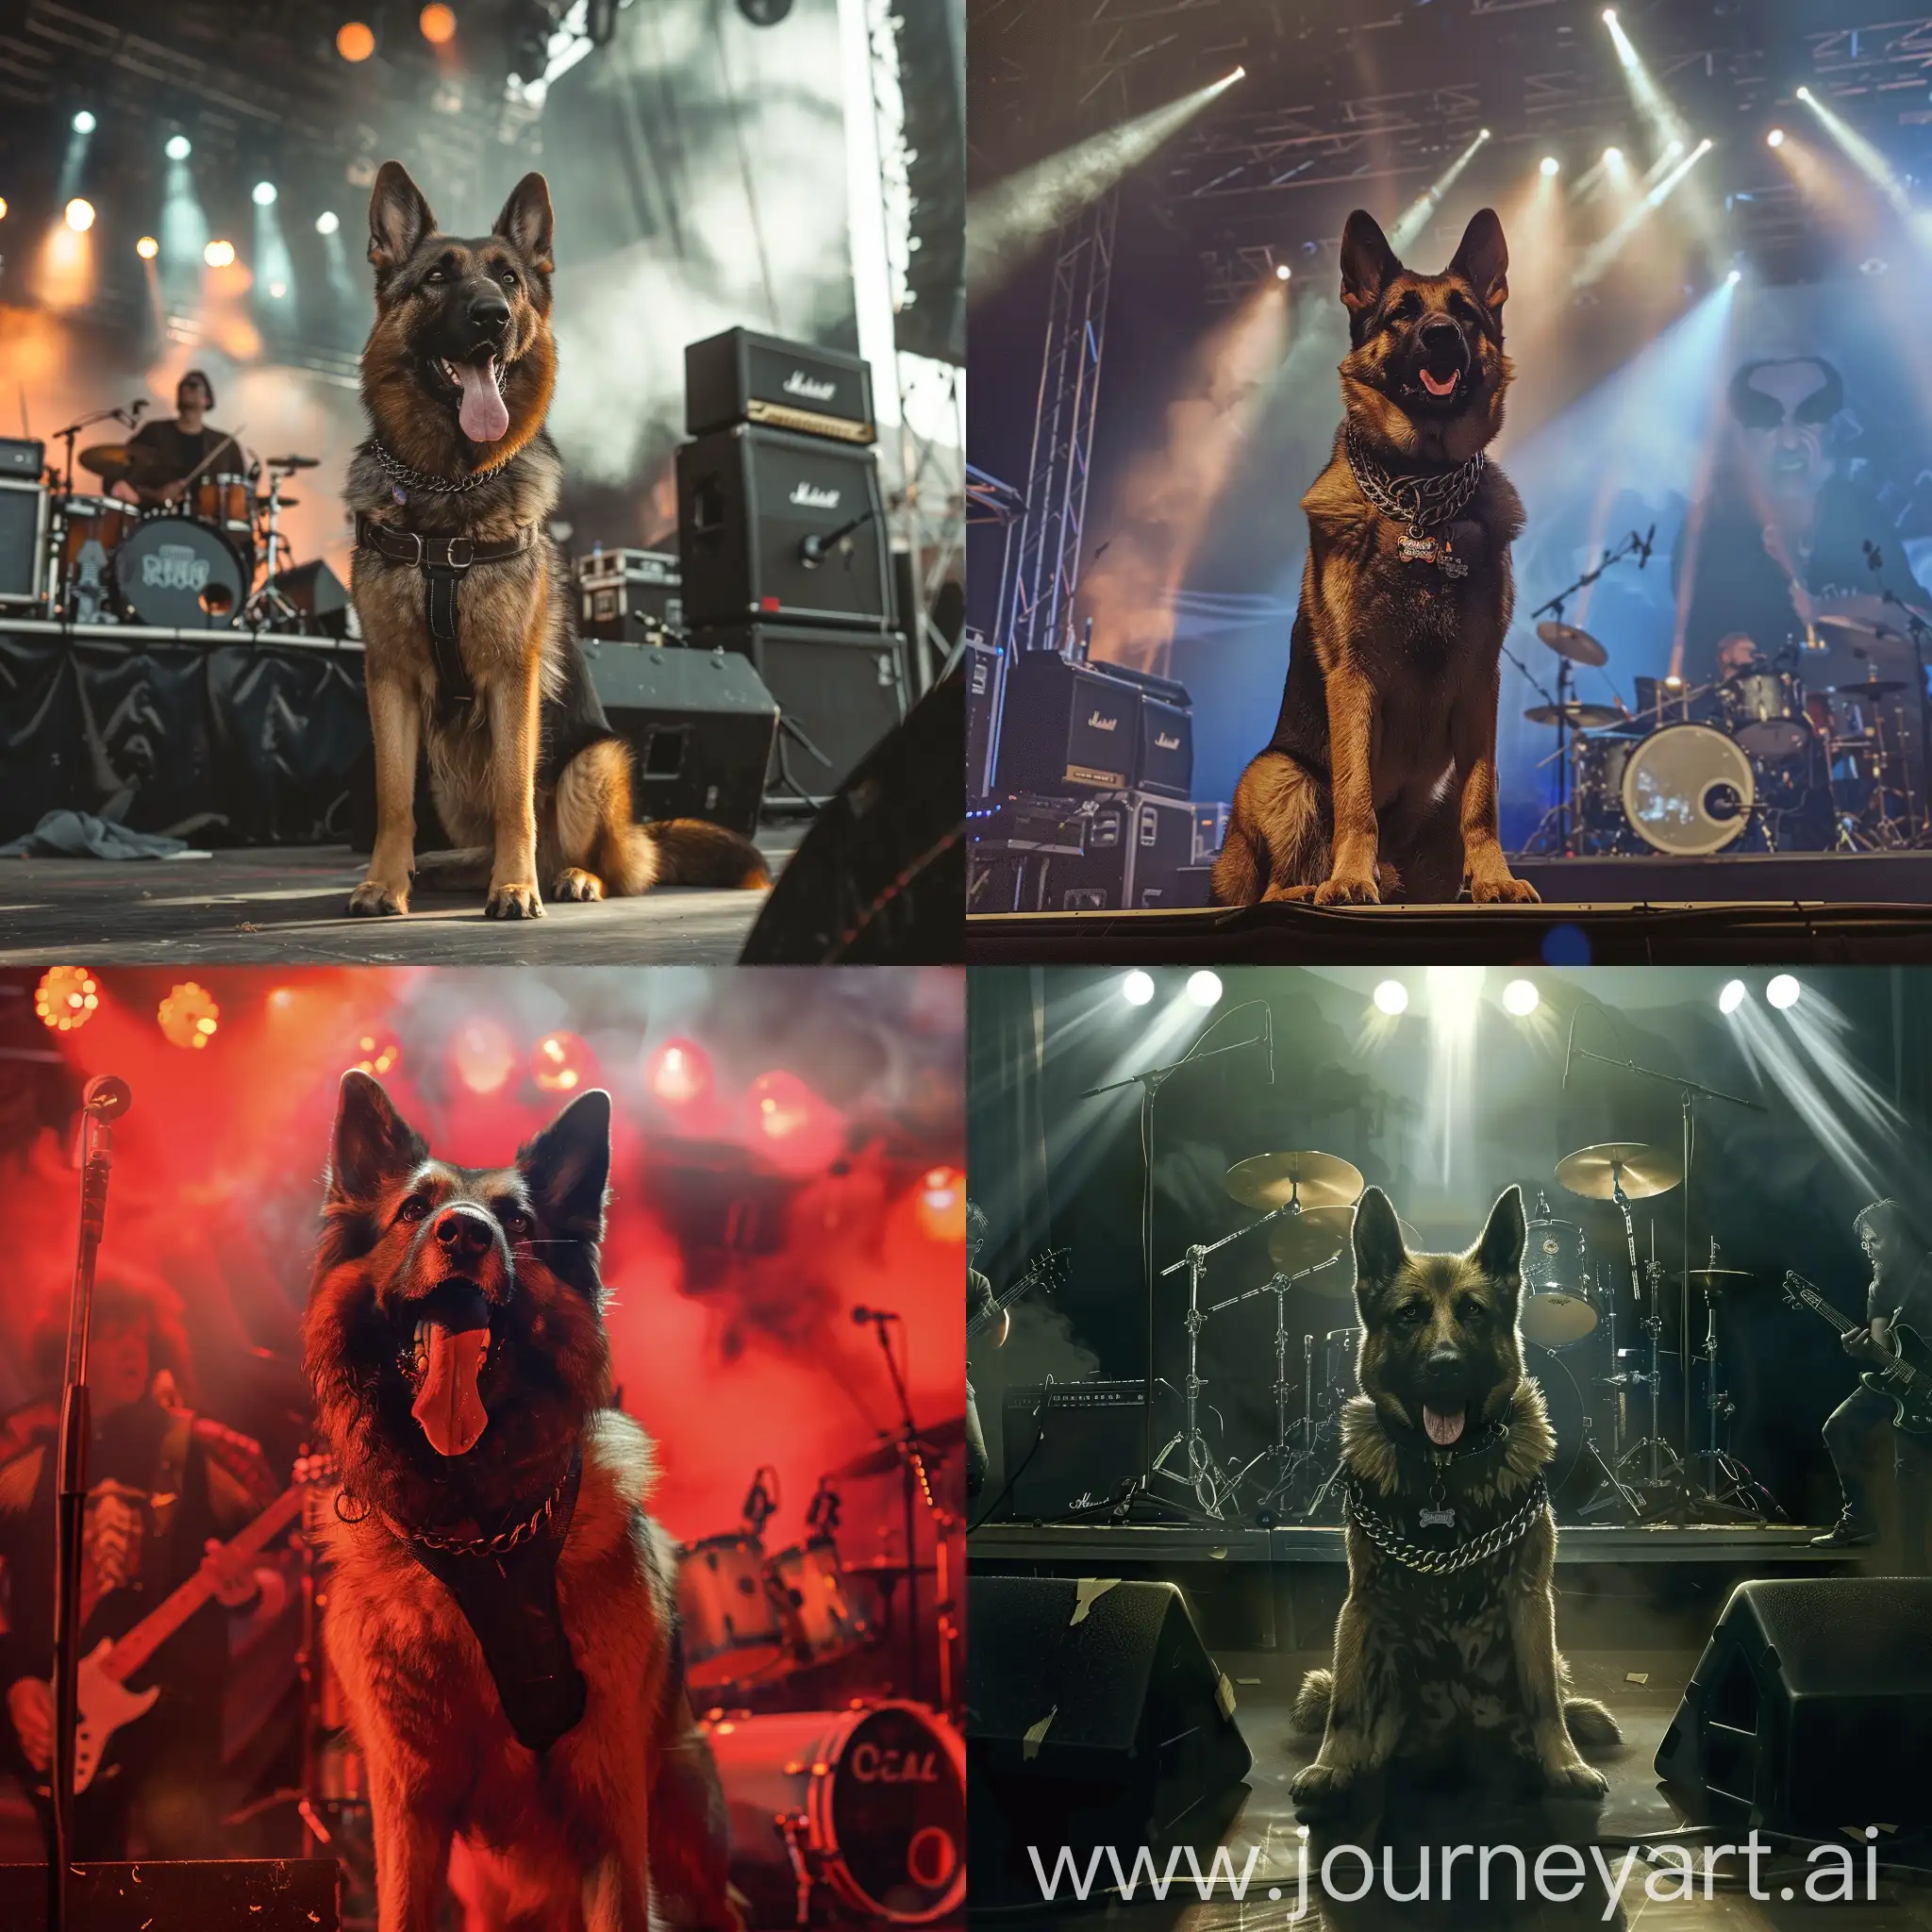 German-Shepherd-Rock-Band-Leader-on-Concert-Stage